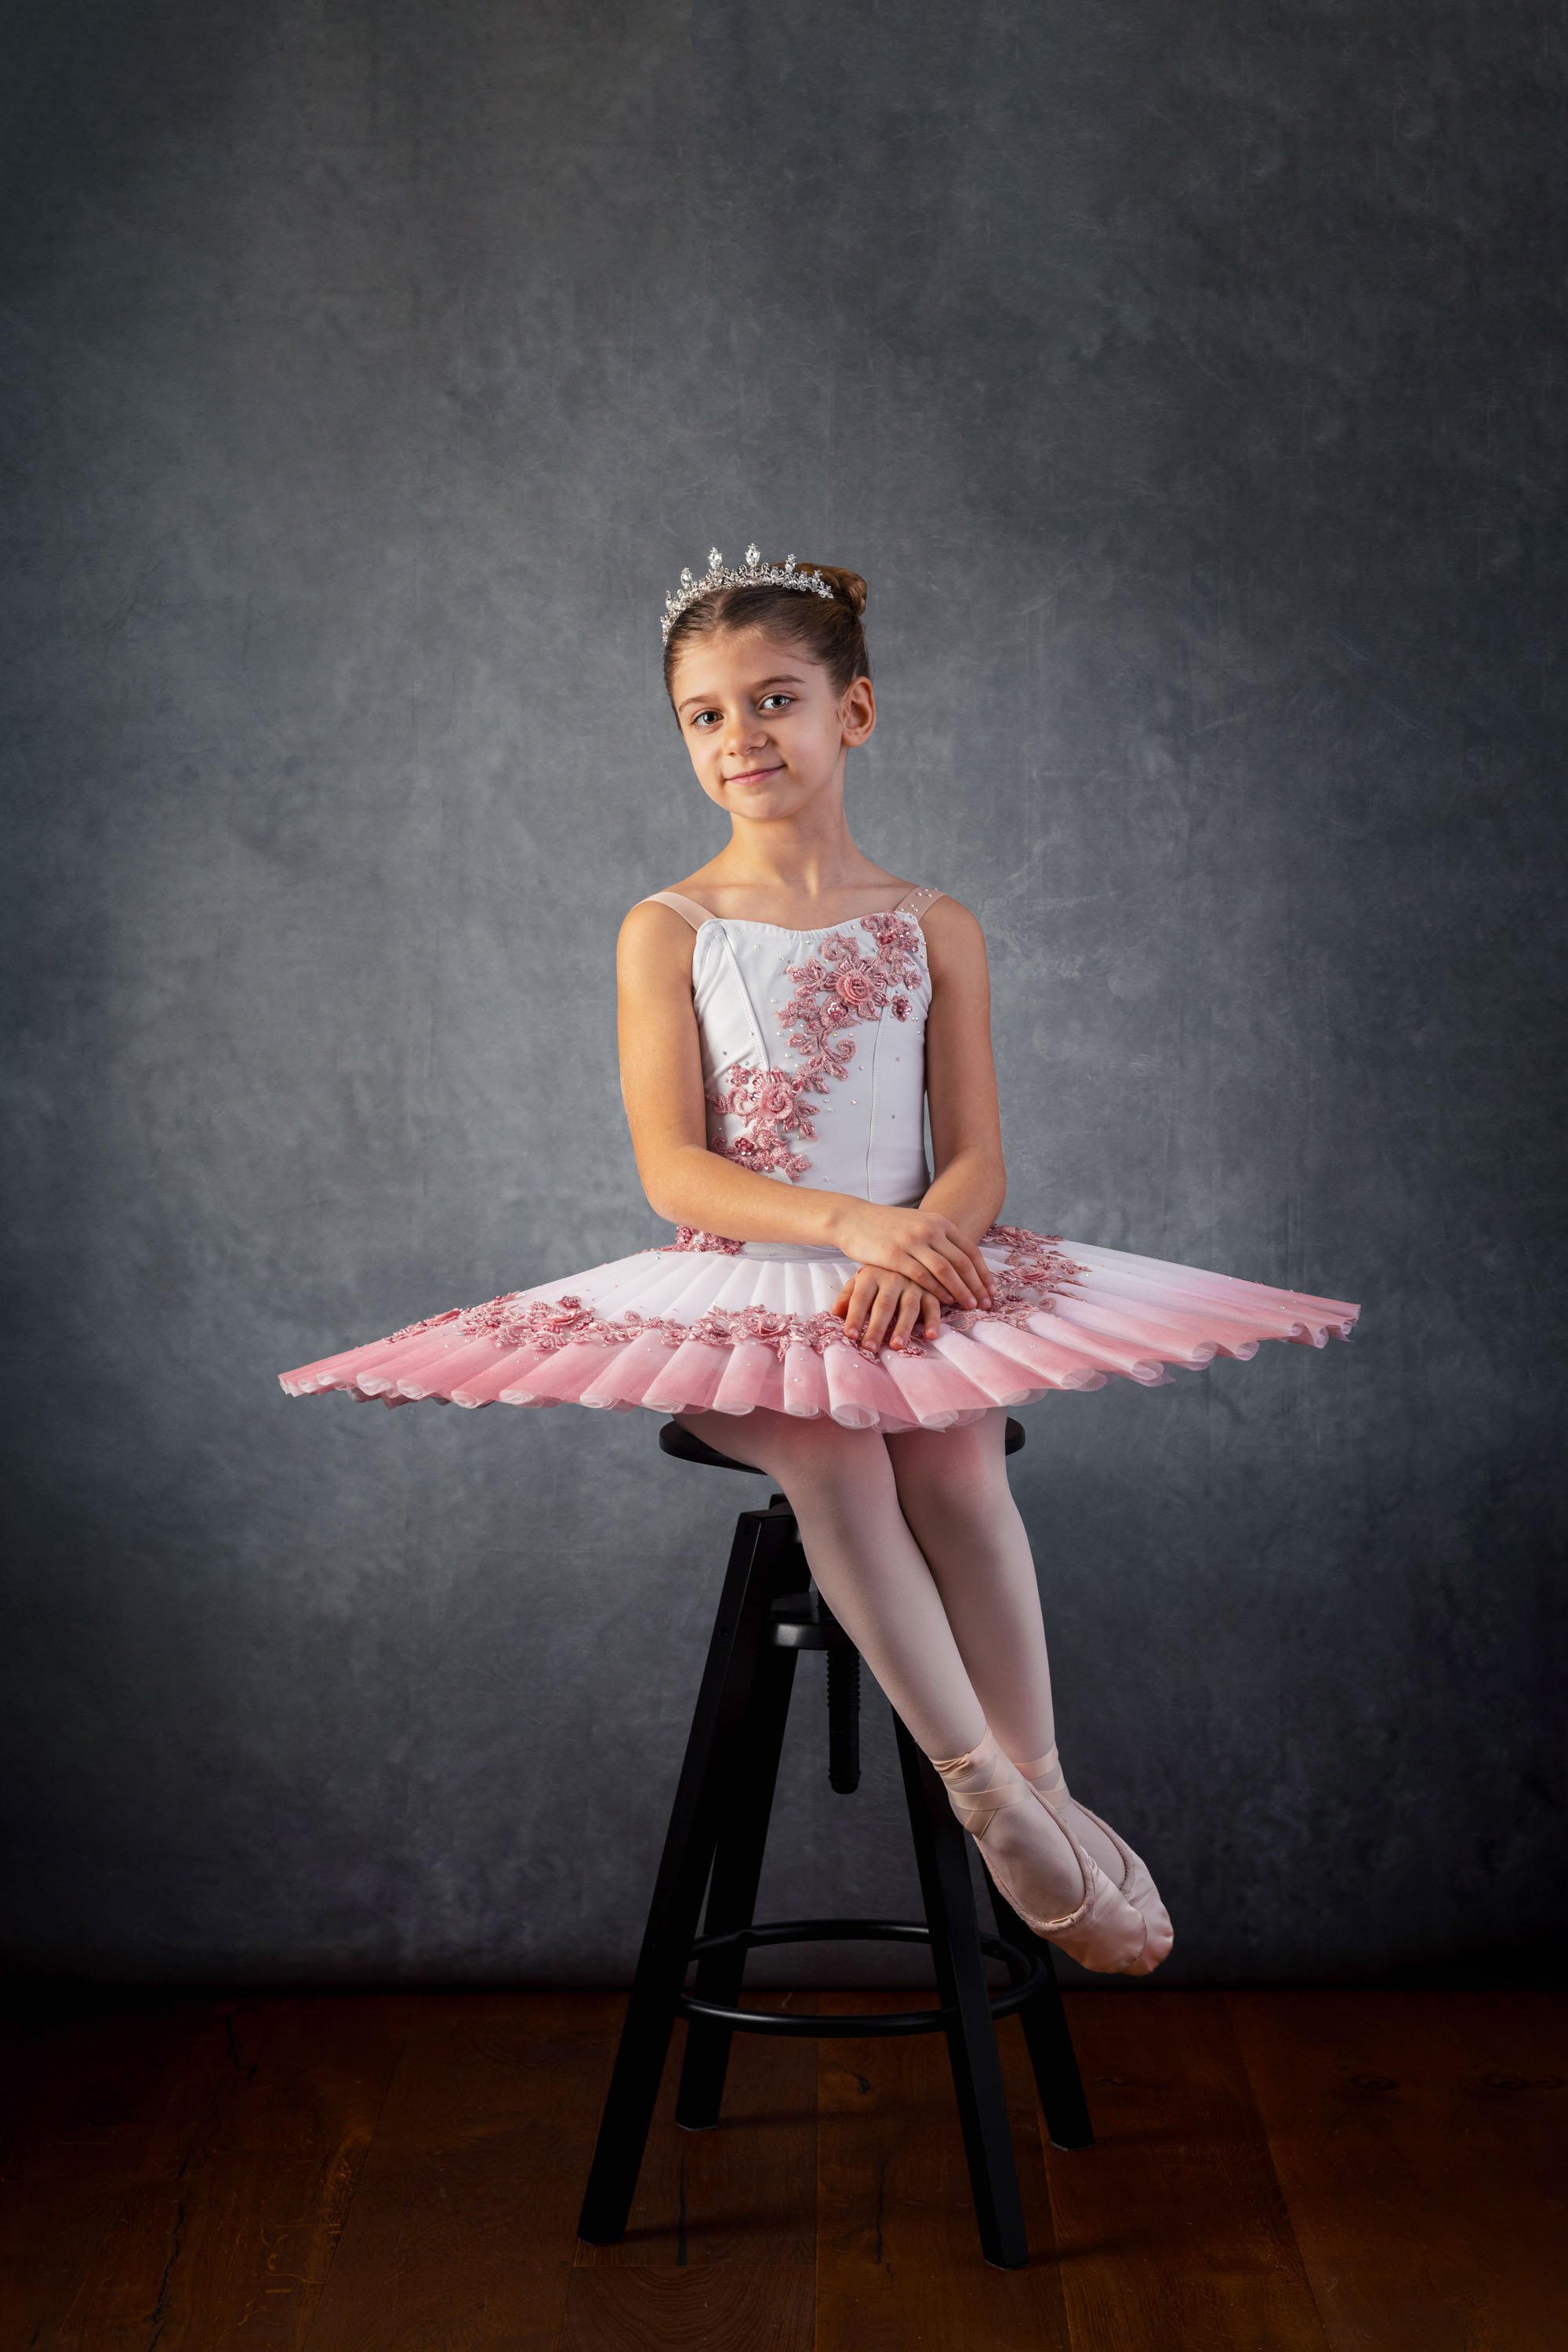 006-advertising-royal-ballet-photographer-model-photographer-ballet.jpeg